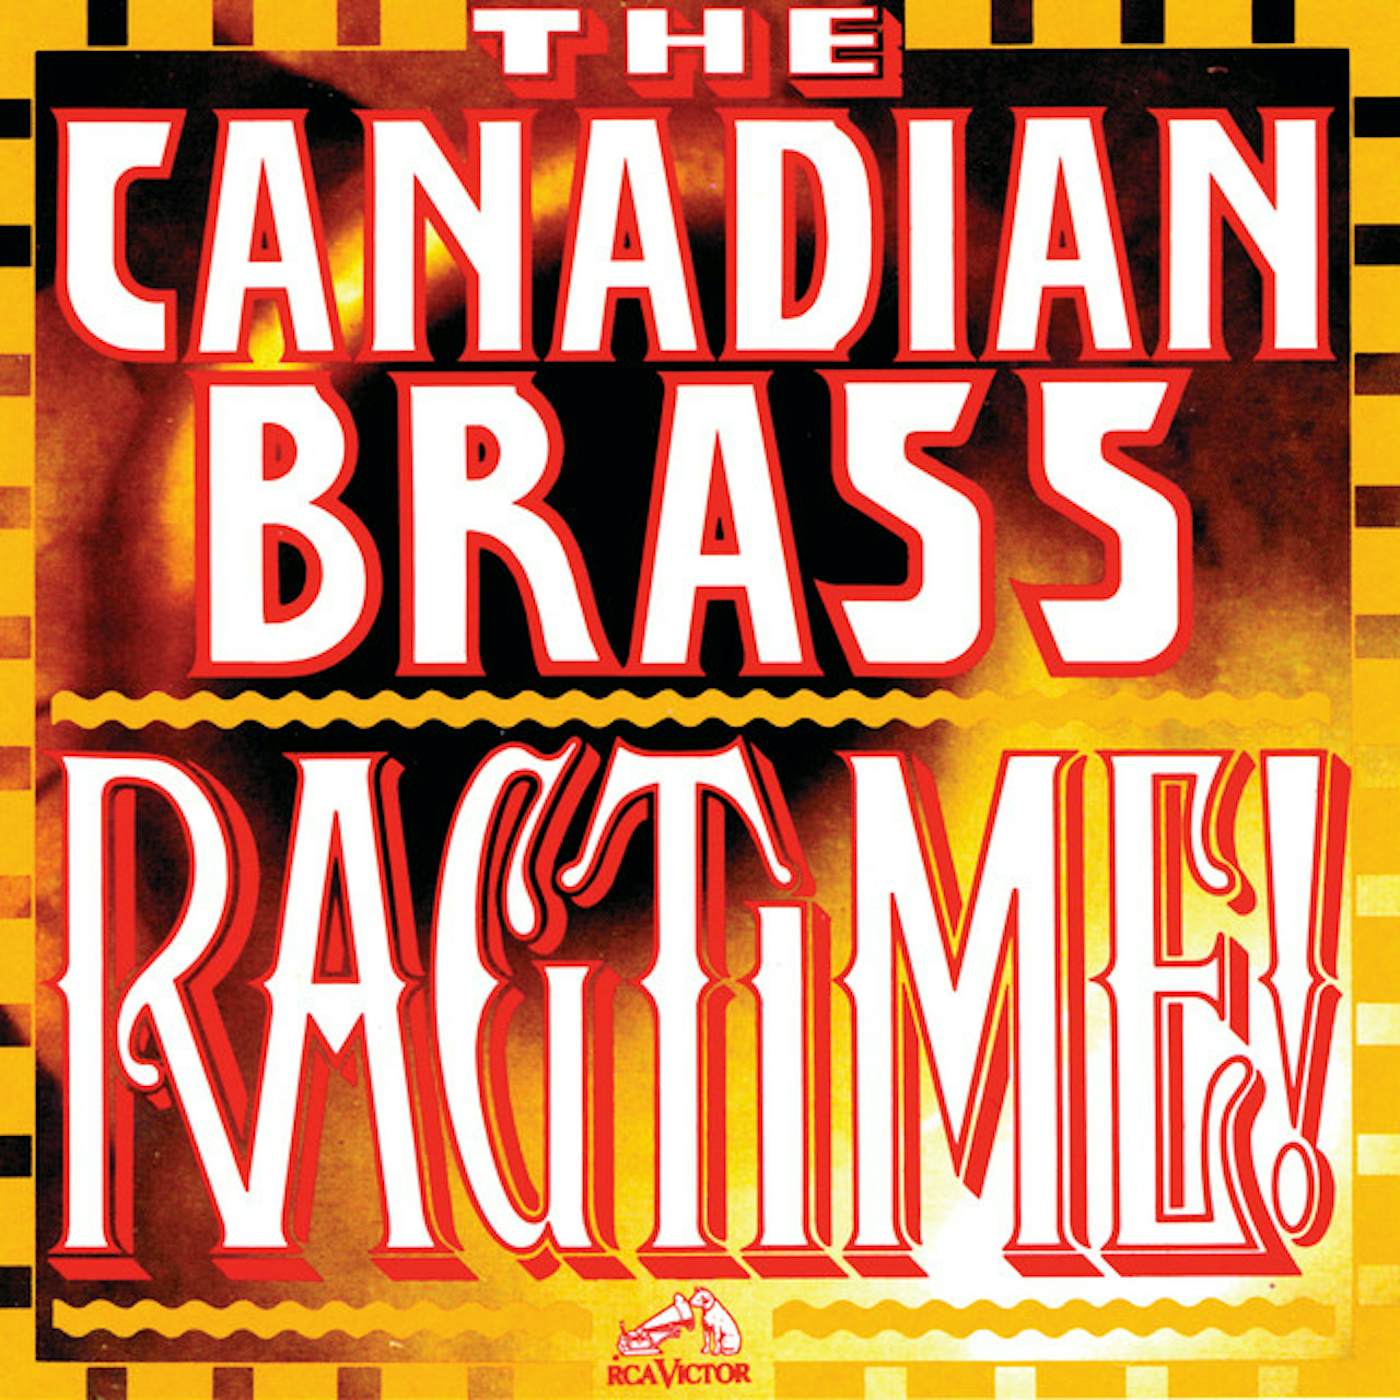 Canadian Brass RAGTIME CD